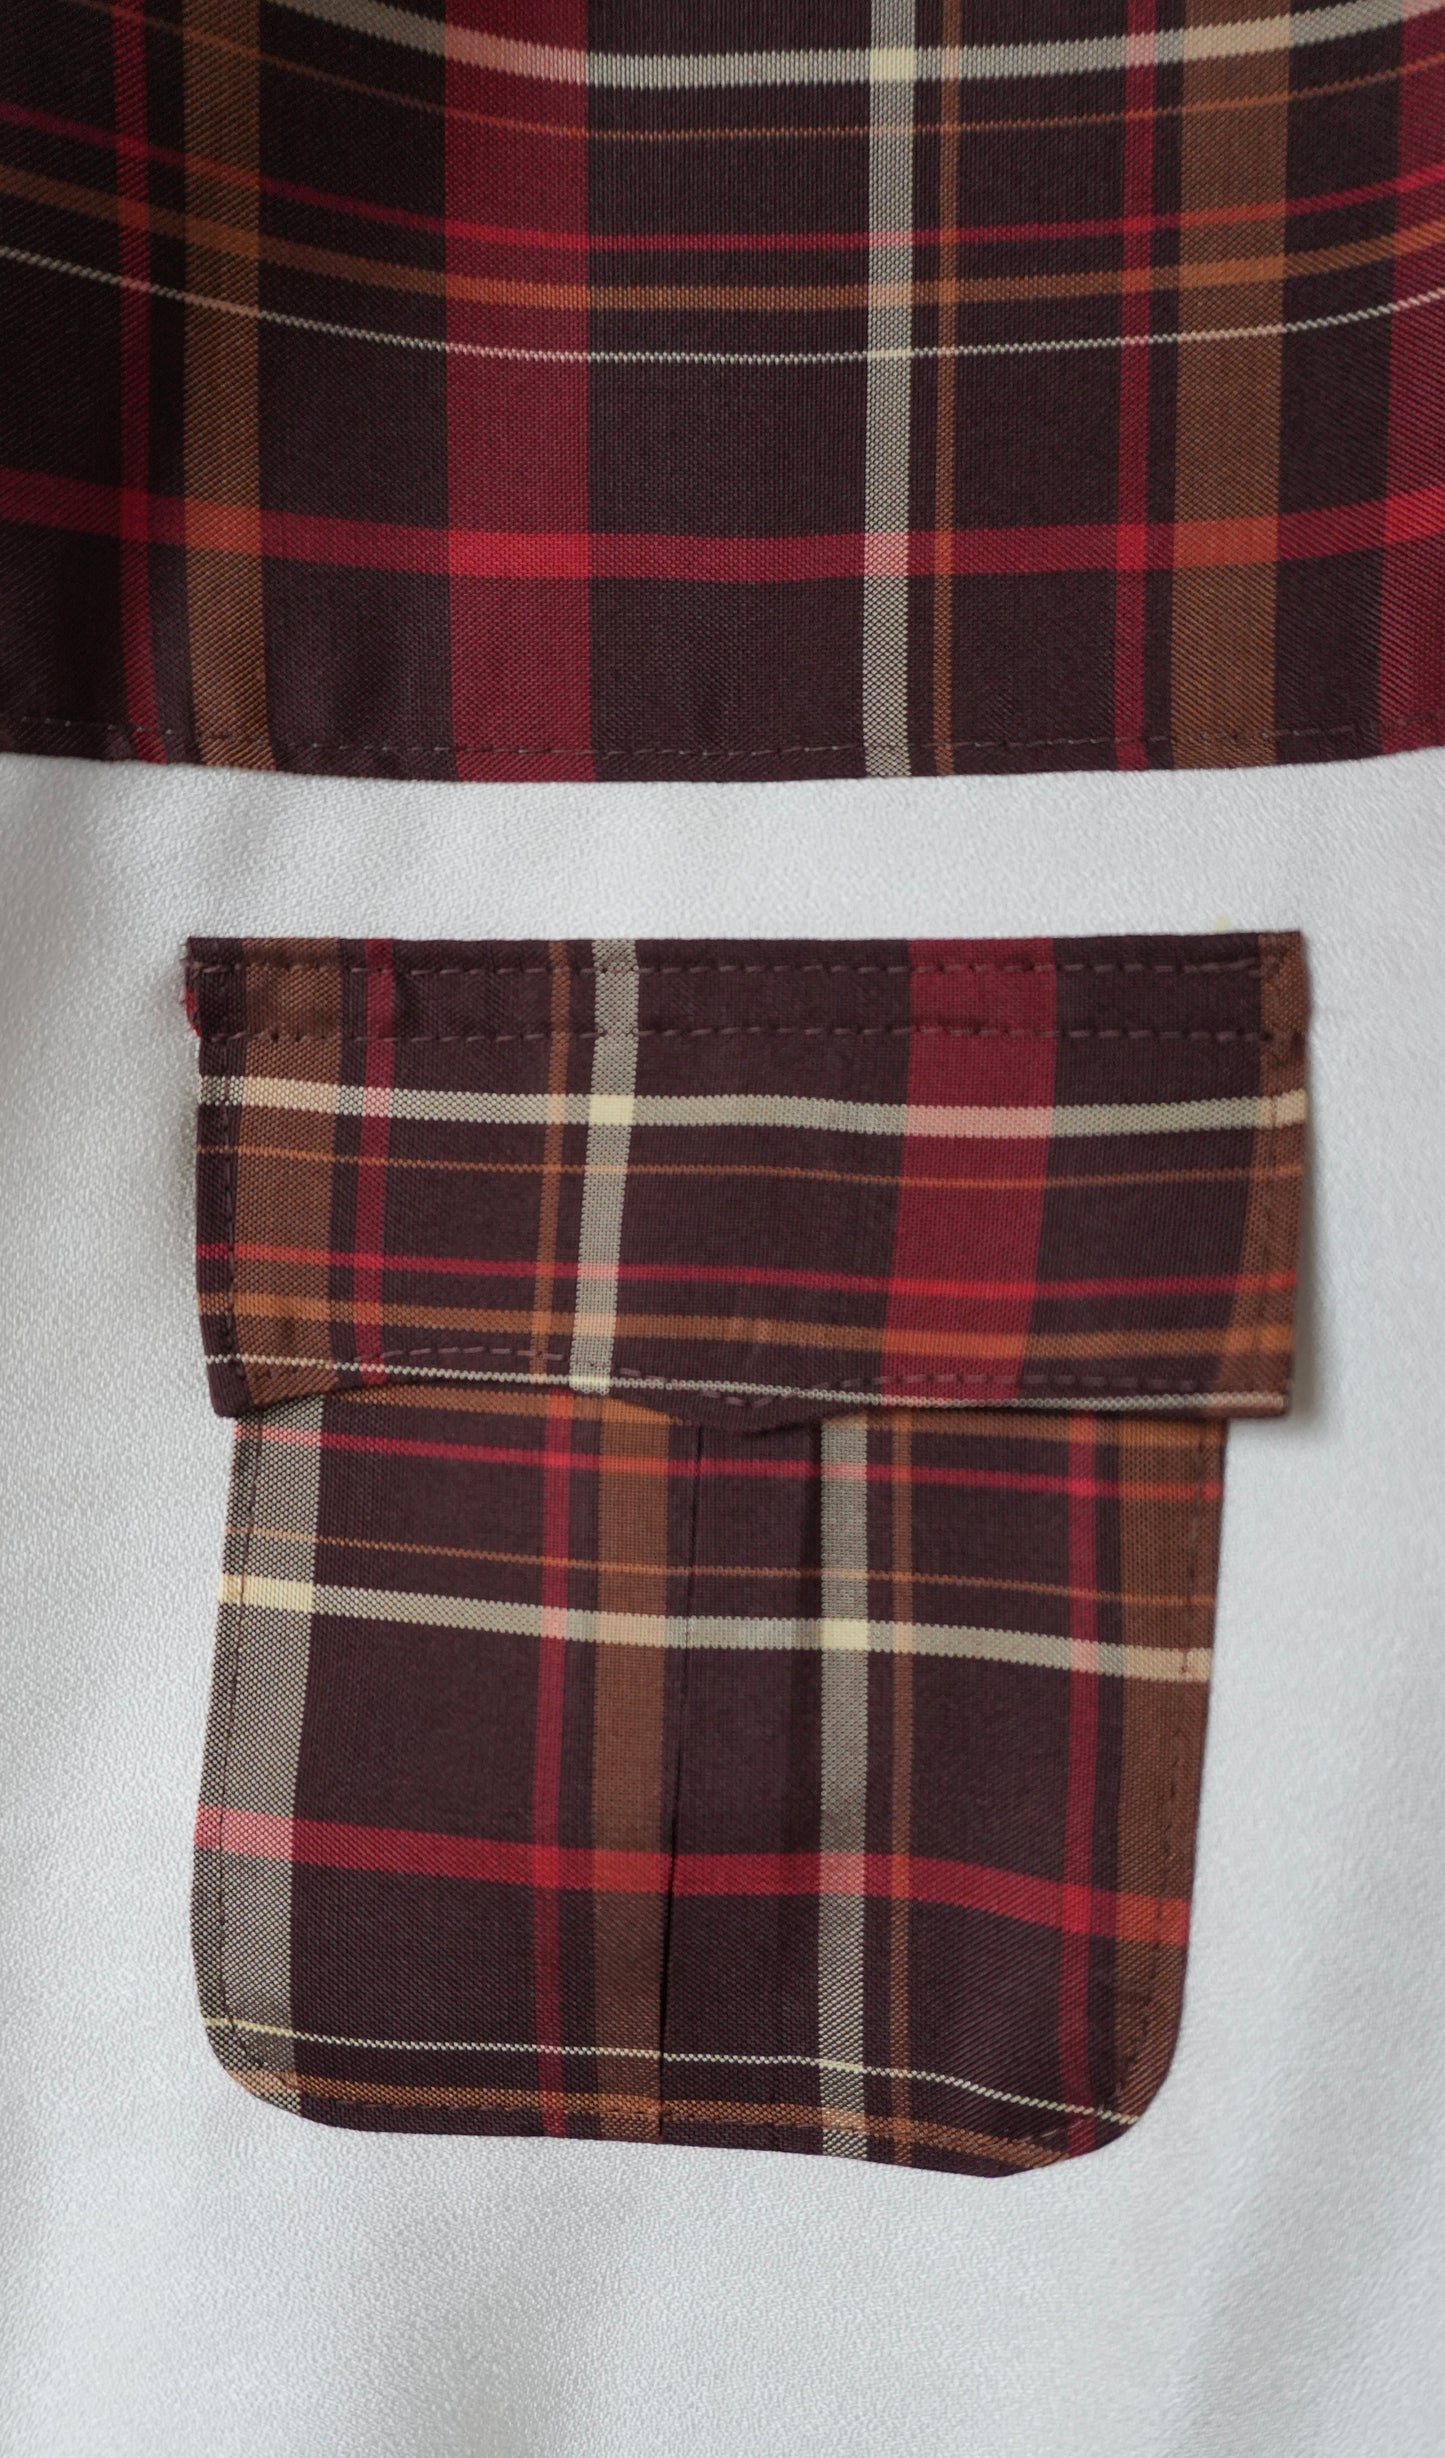 L Size Brown Silk Shirt (No. 22/200)